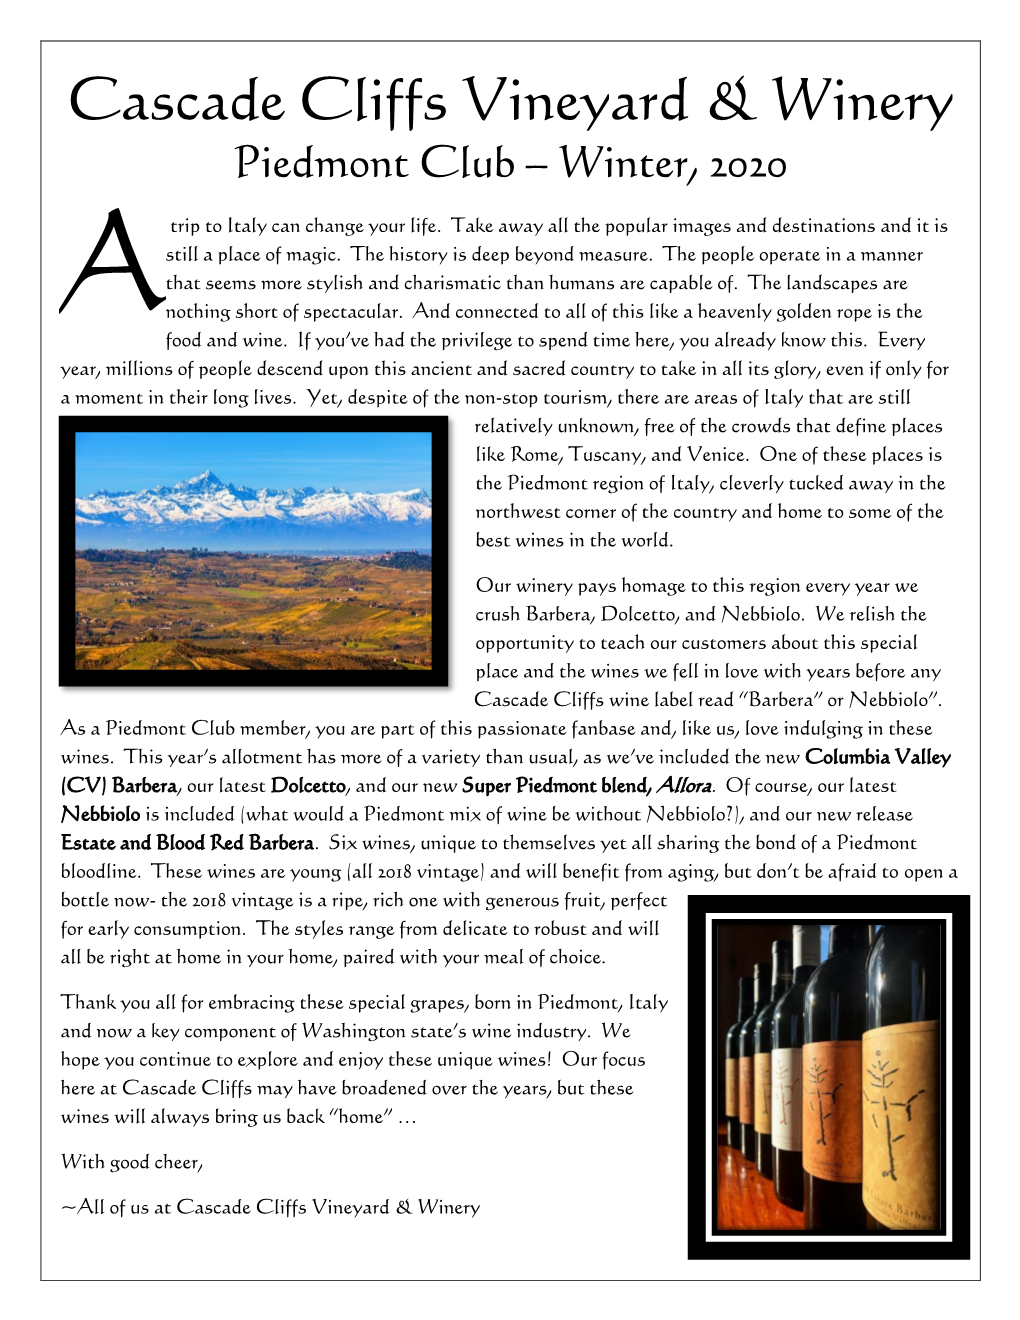 Piedmont Club – Winter, 2020